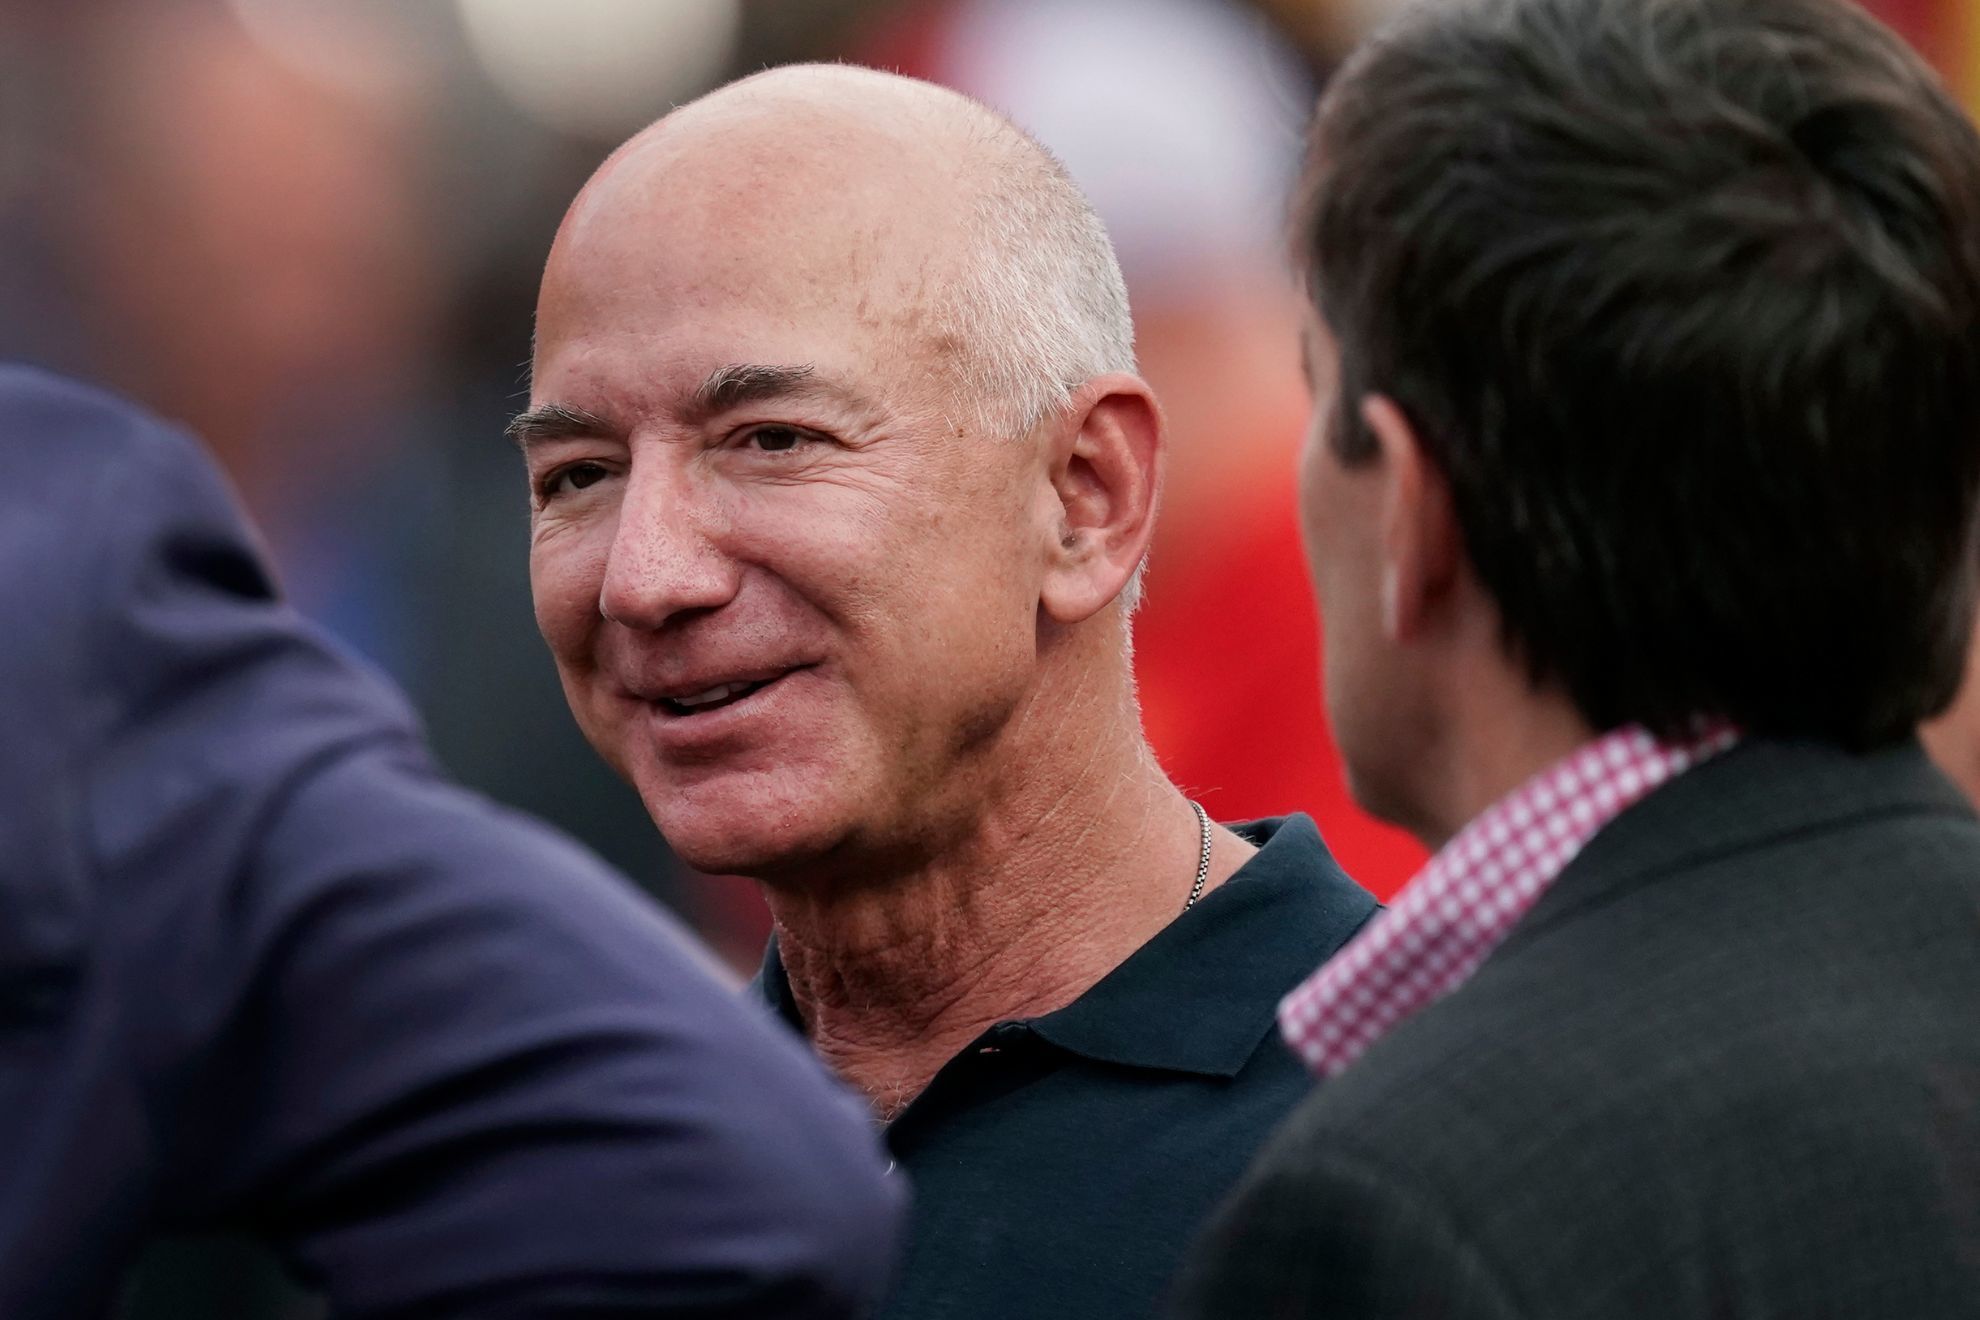 Jeff Bezos, Amazon founder to make bid for Washington Commanders